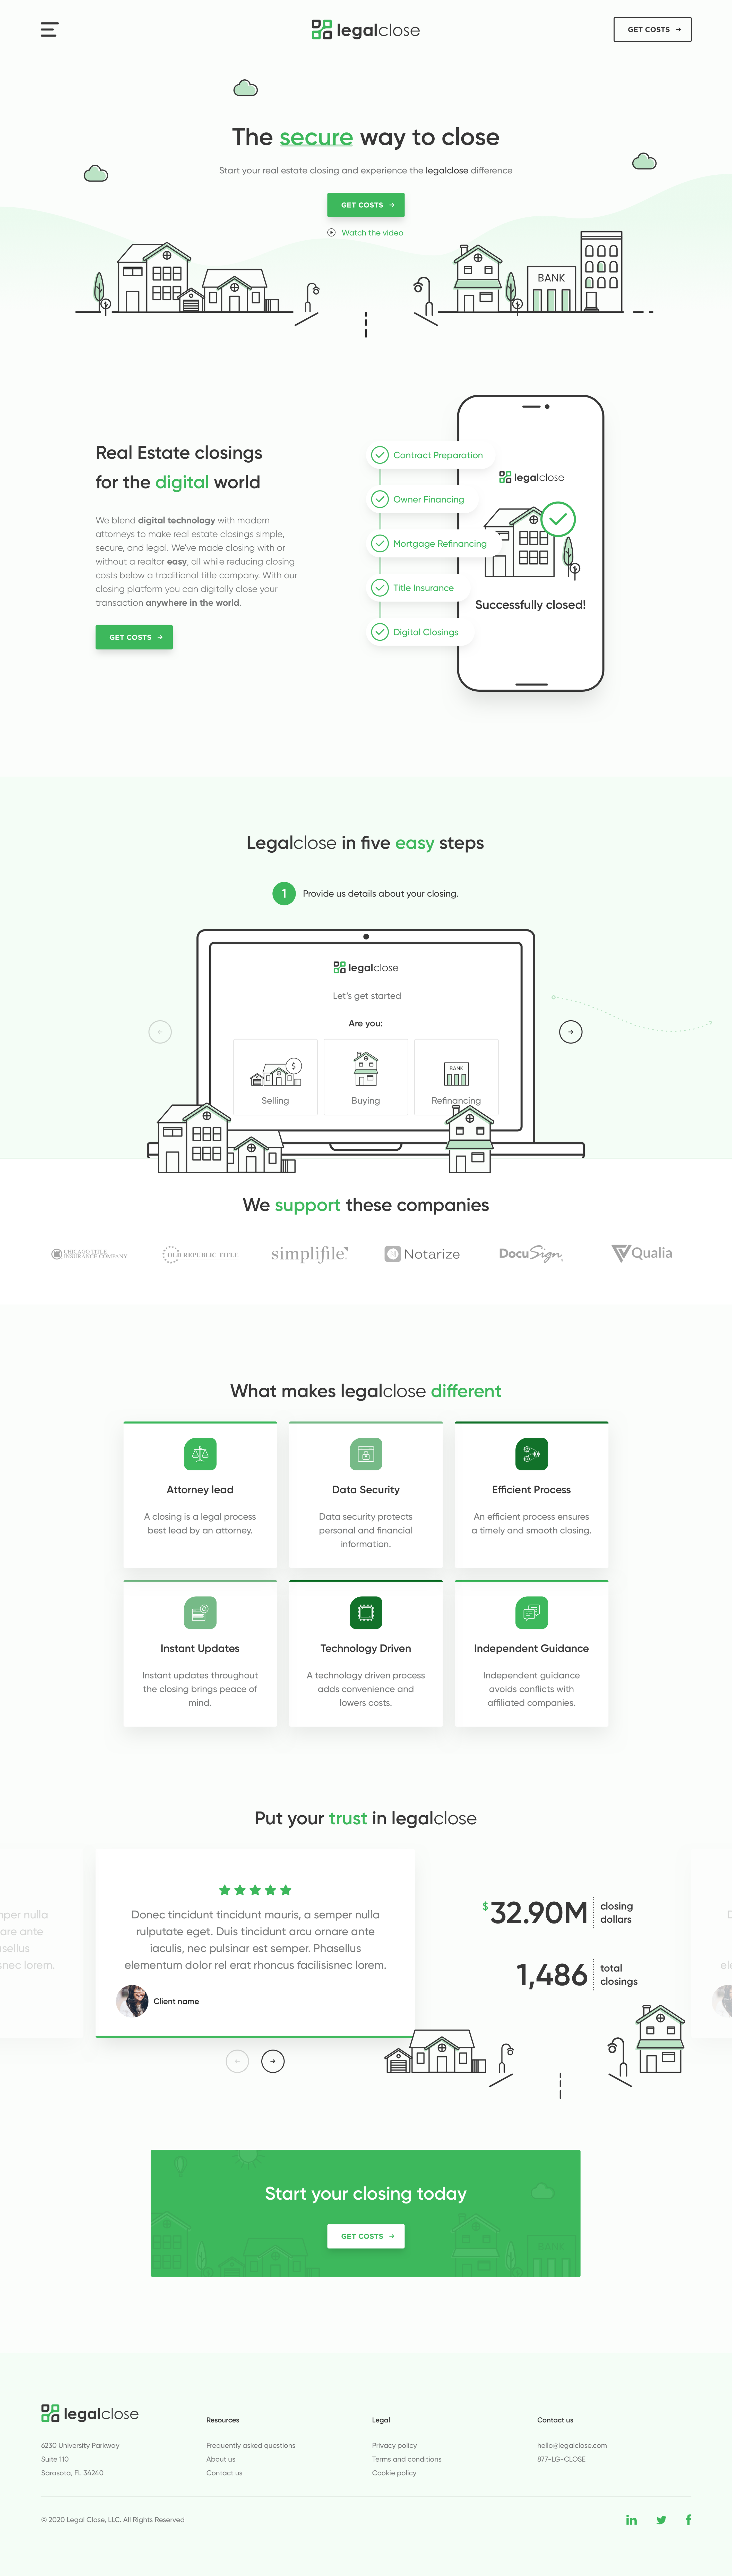 Legalclose homepage design